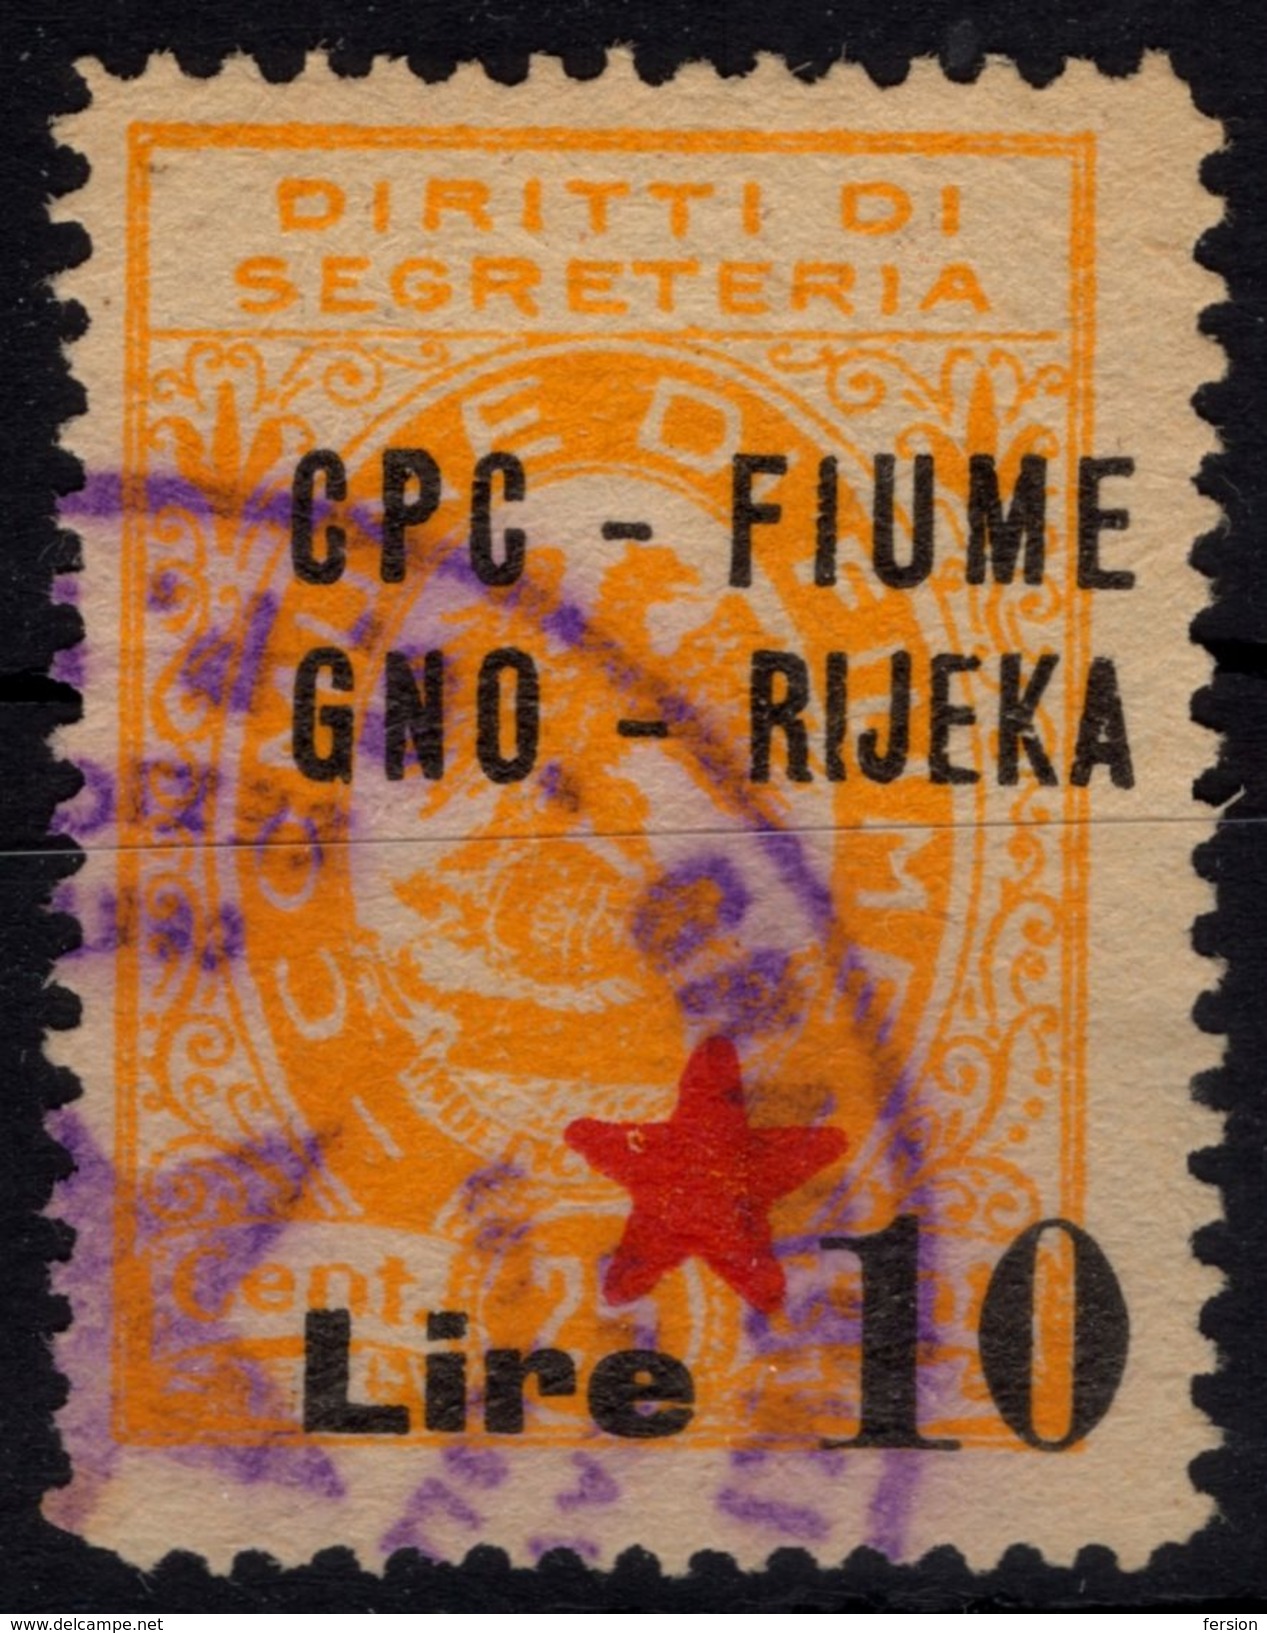 1945 - Istria Istra / Rijeka Fiume - Yugoslavia Occupation - Revenue Stamp - Overprint - Used CROATIA - Yugoslavian Occ.: Fiume